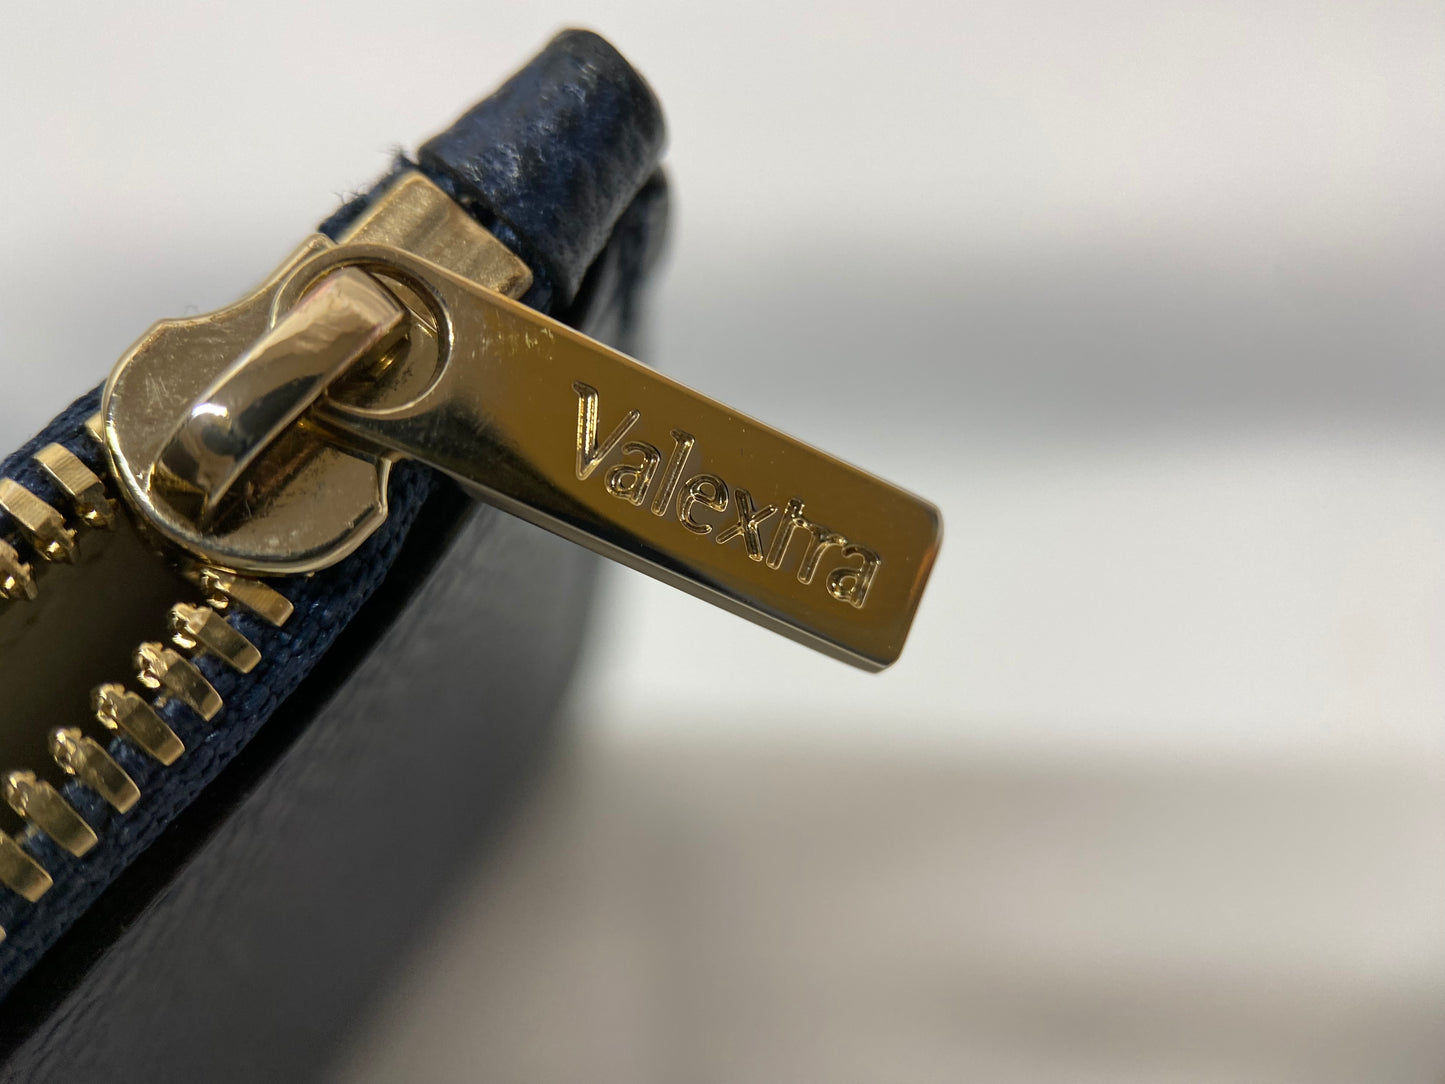 Valextra Valextra leather card case coin purse navy